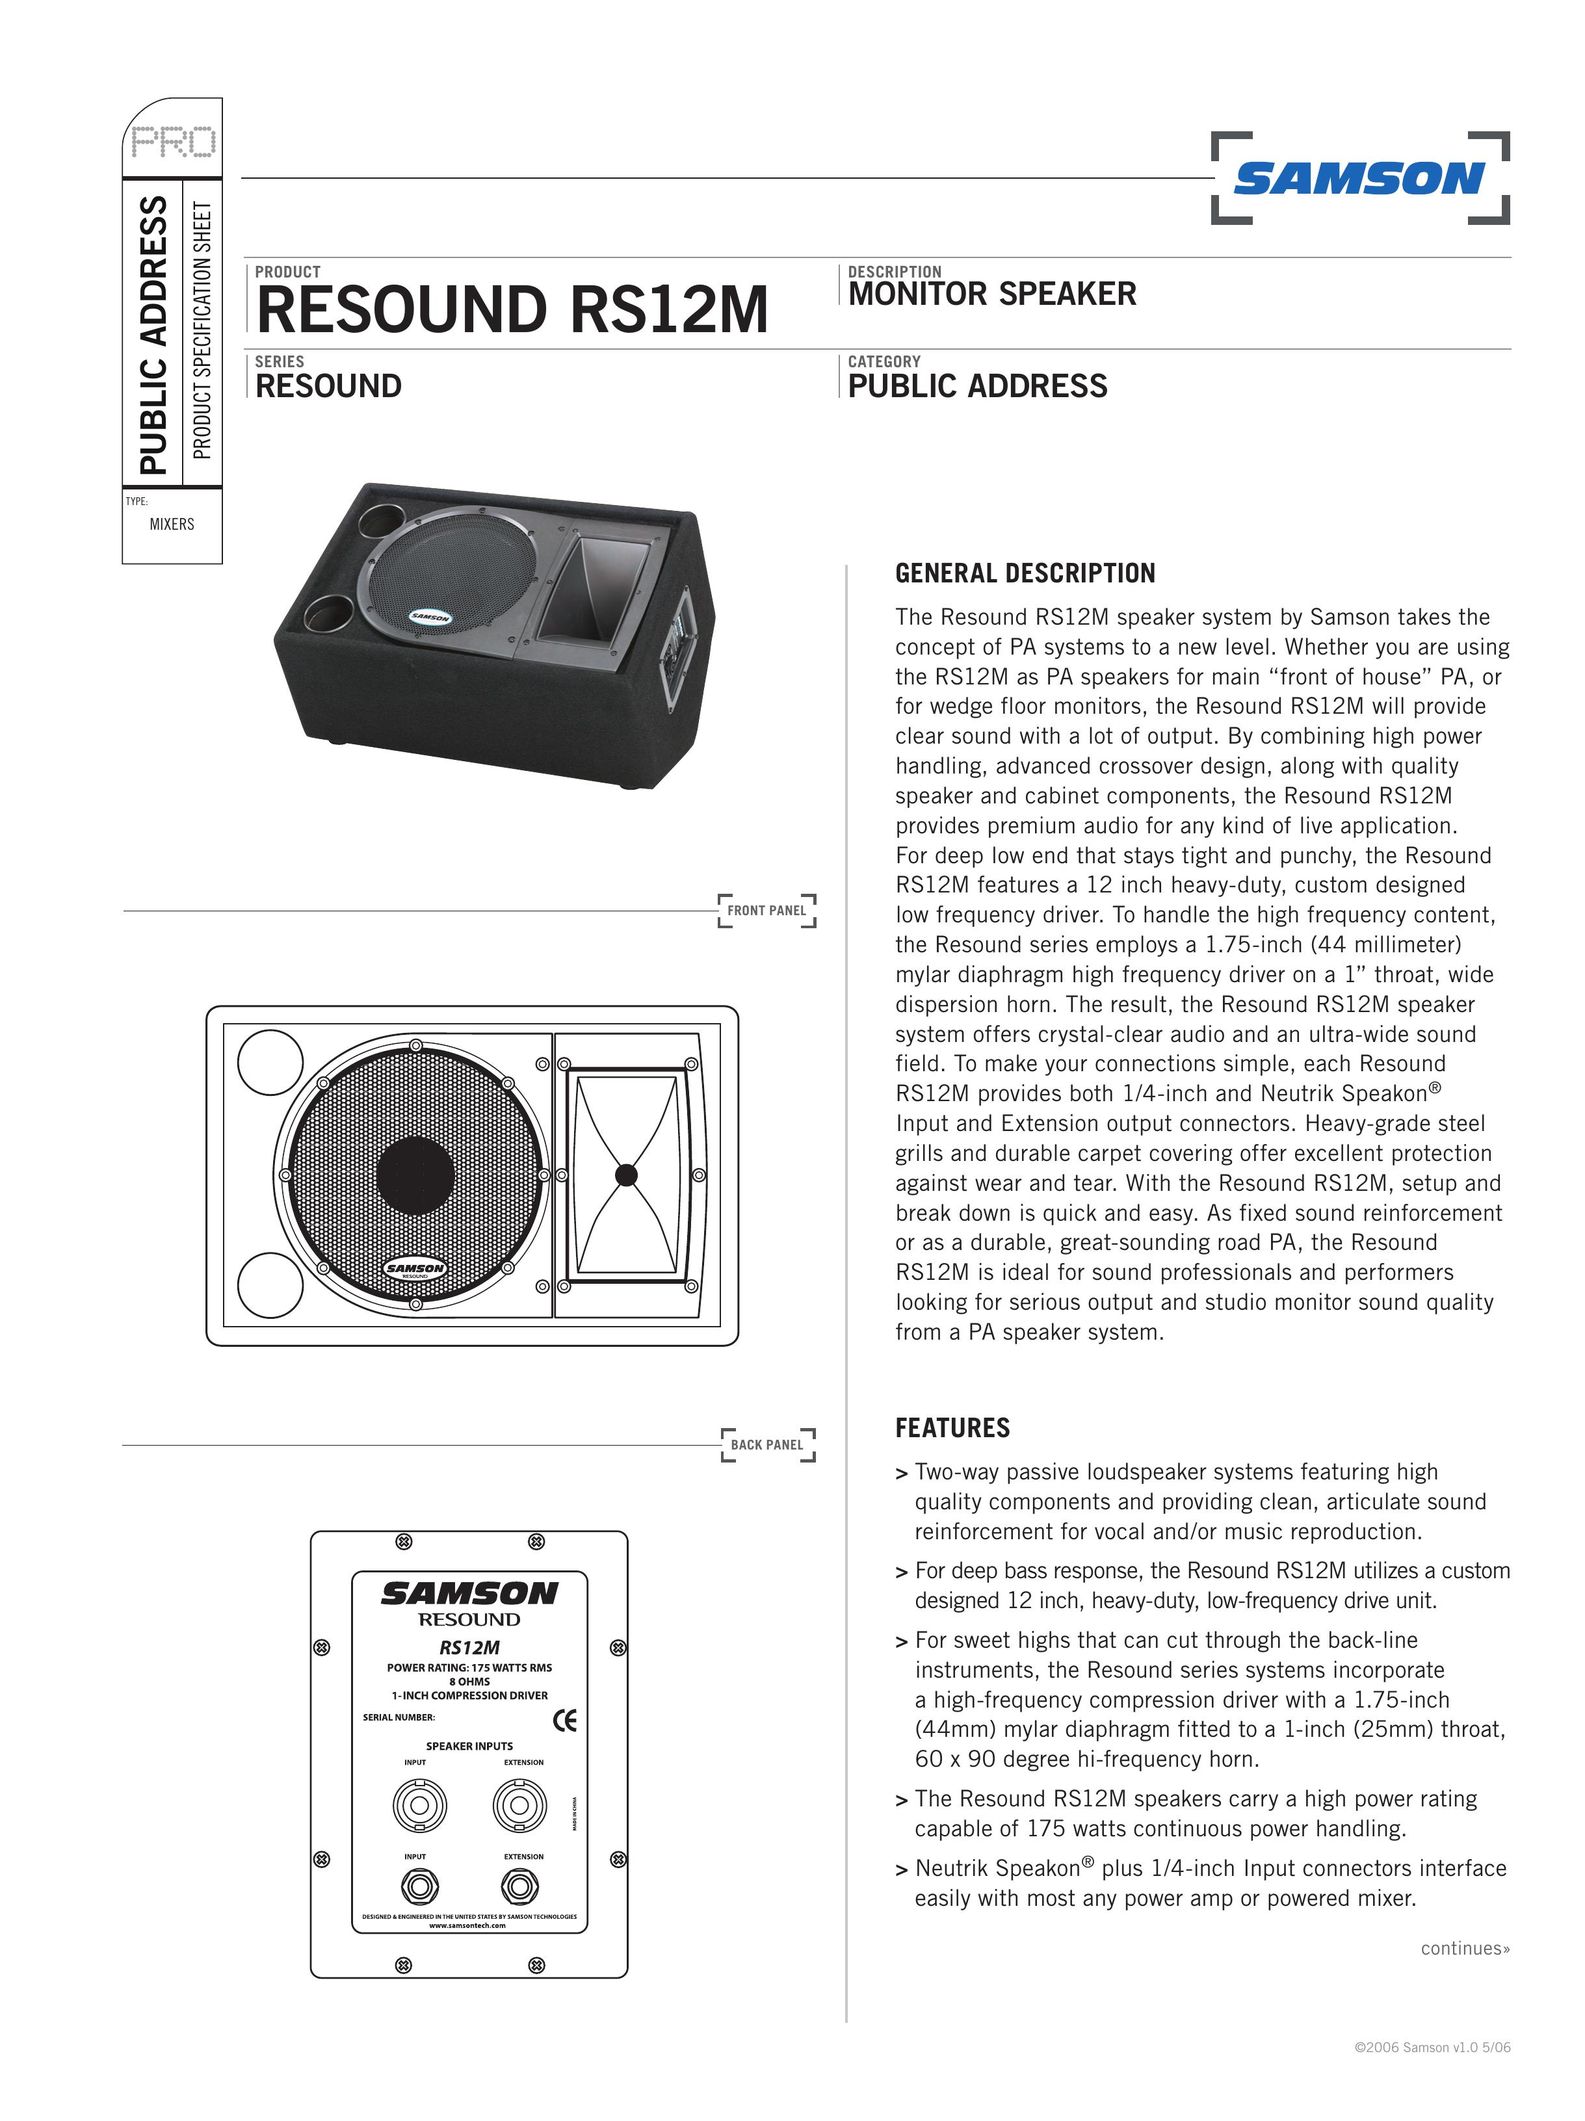 Samson RESOUND RS12M Speaker System User Manual